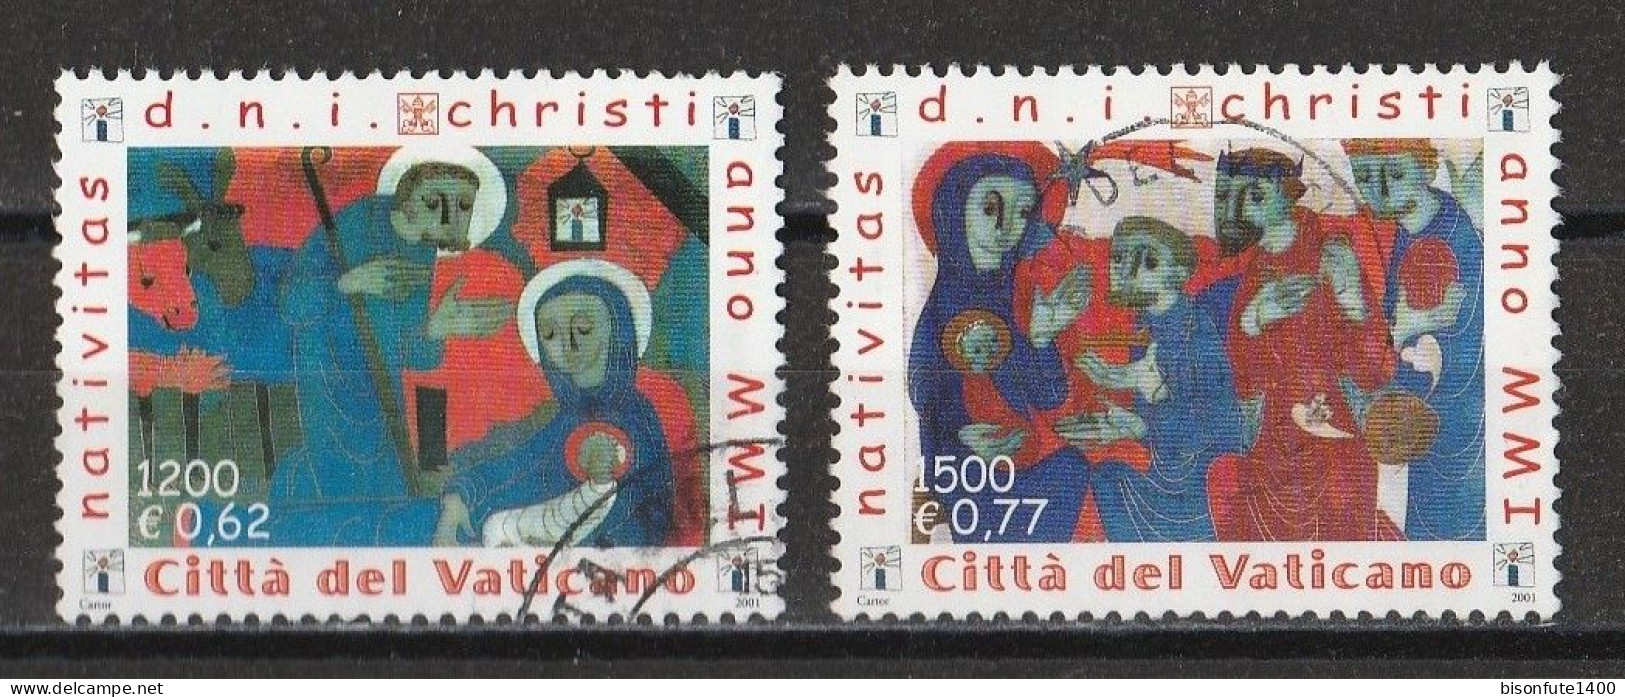 Vatican 2001 : Timbres Yvert & Tellier N° 1238 - 1239 - 1240 - 1246 - 1247 - 1248 Et 1249 Oblitérés. - Usados